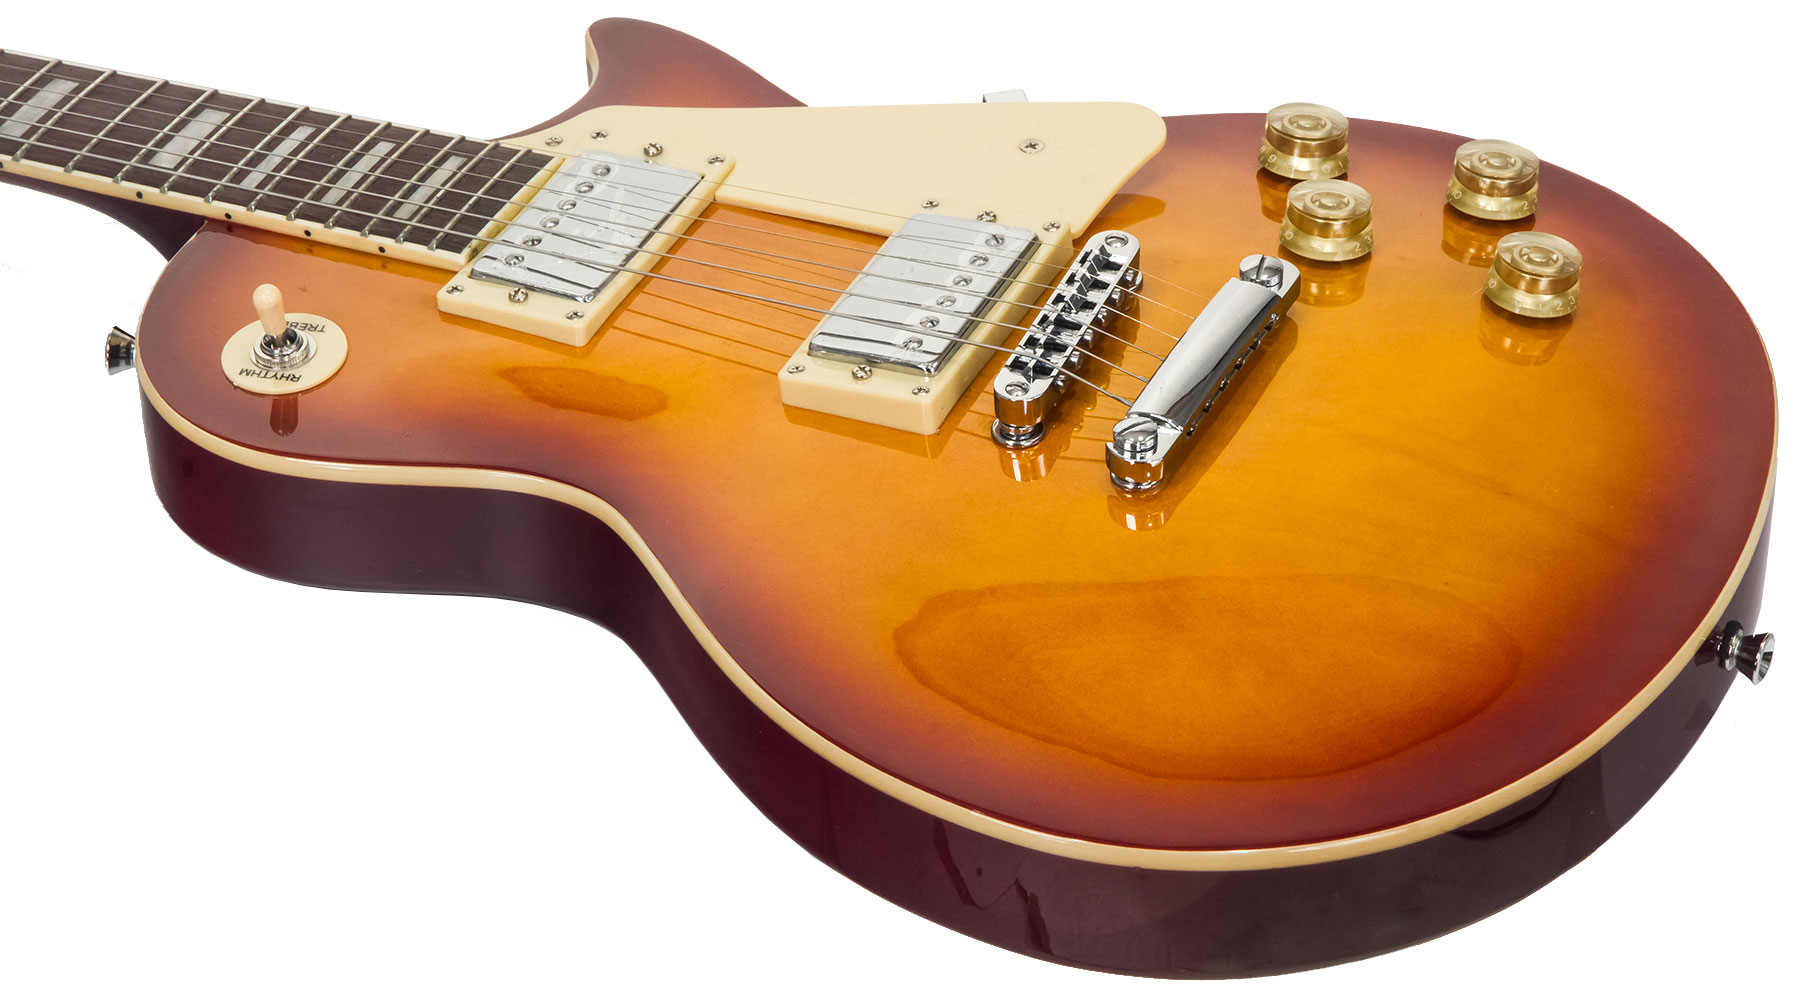 Eastone Lp100 Cs +marshall Mg10 10w +cable +mediators +housse + Mg10g Gold Combo 10 W - Cherry Sunburst - Elektrische gitaar set - Variation 2